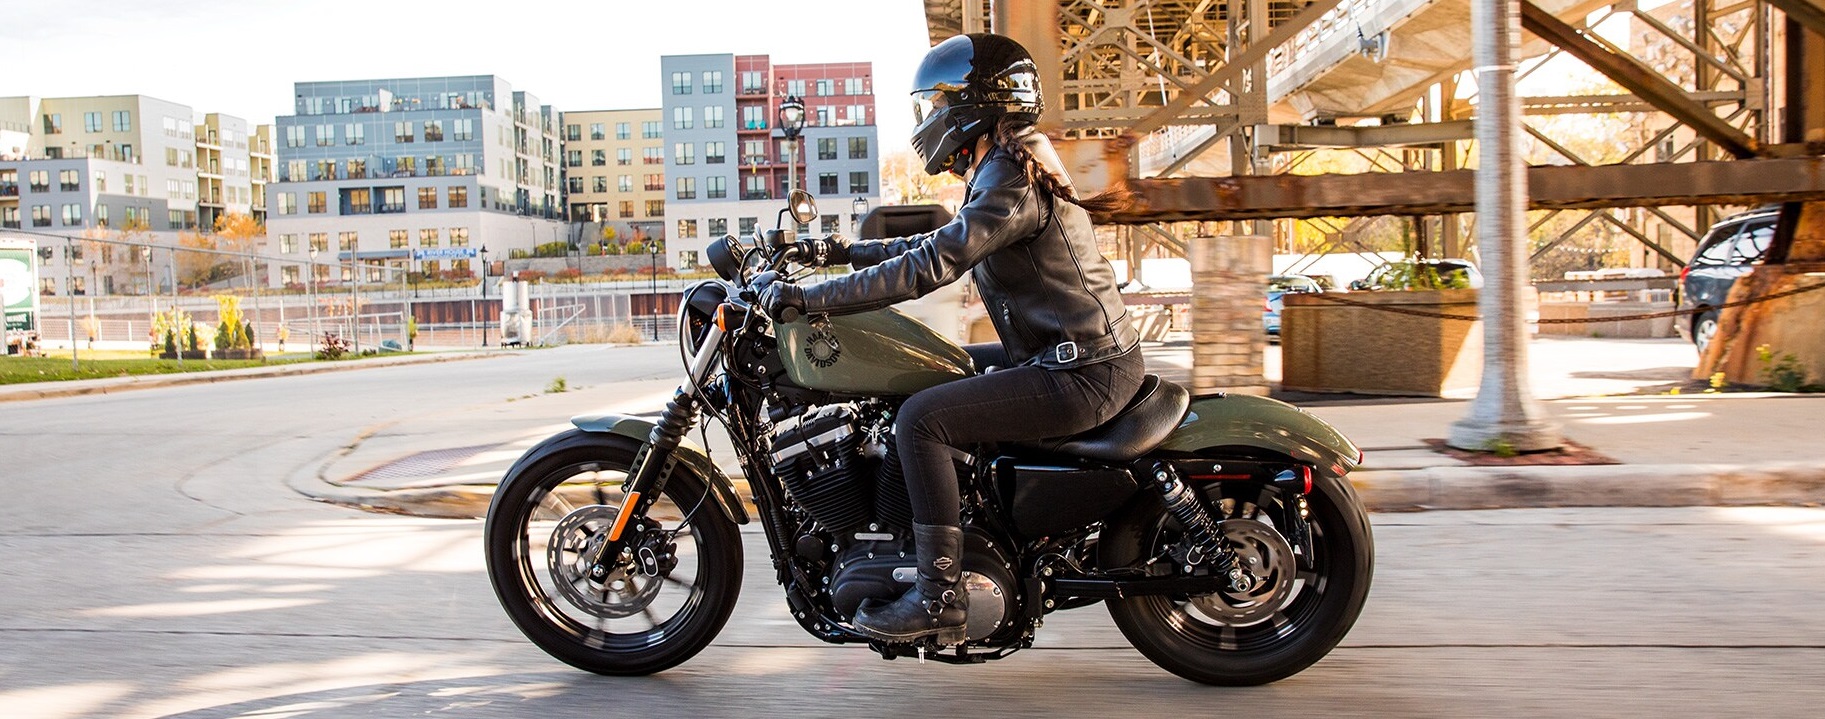 2021 Harley-Davidson® Iron 883™ in Portland ME